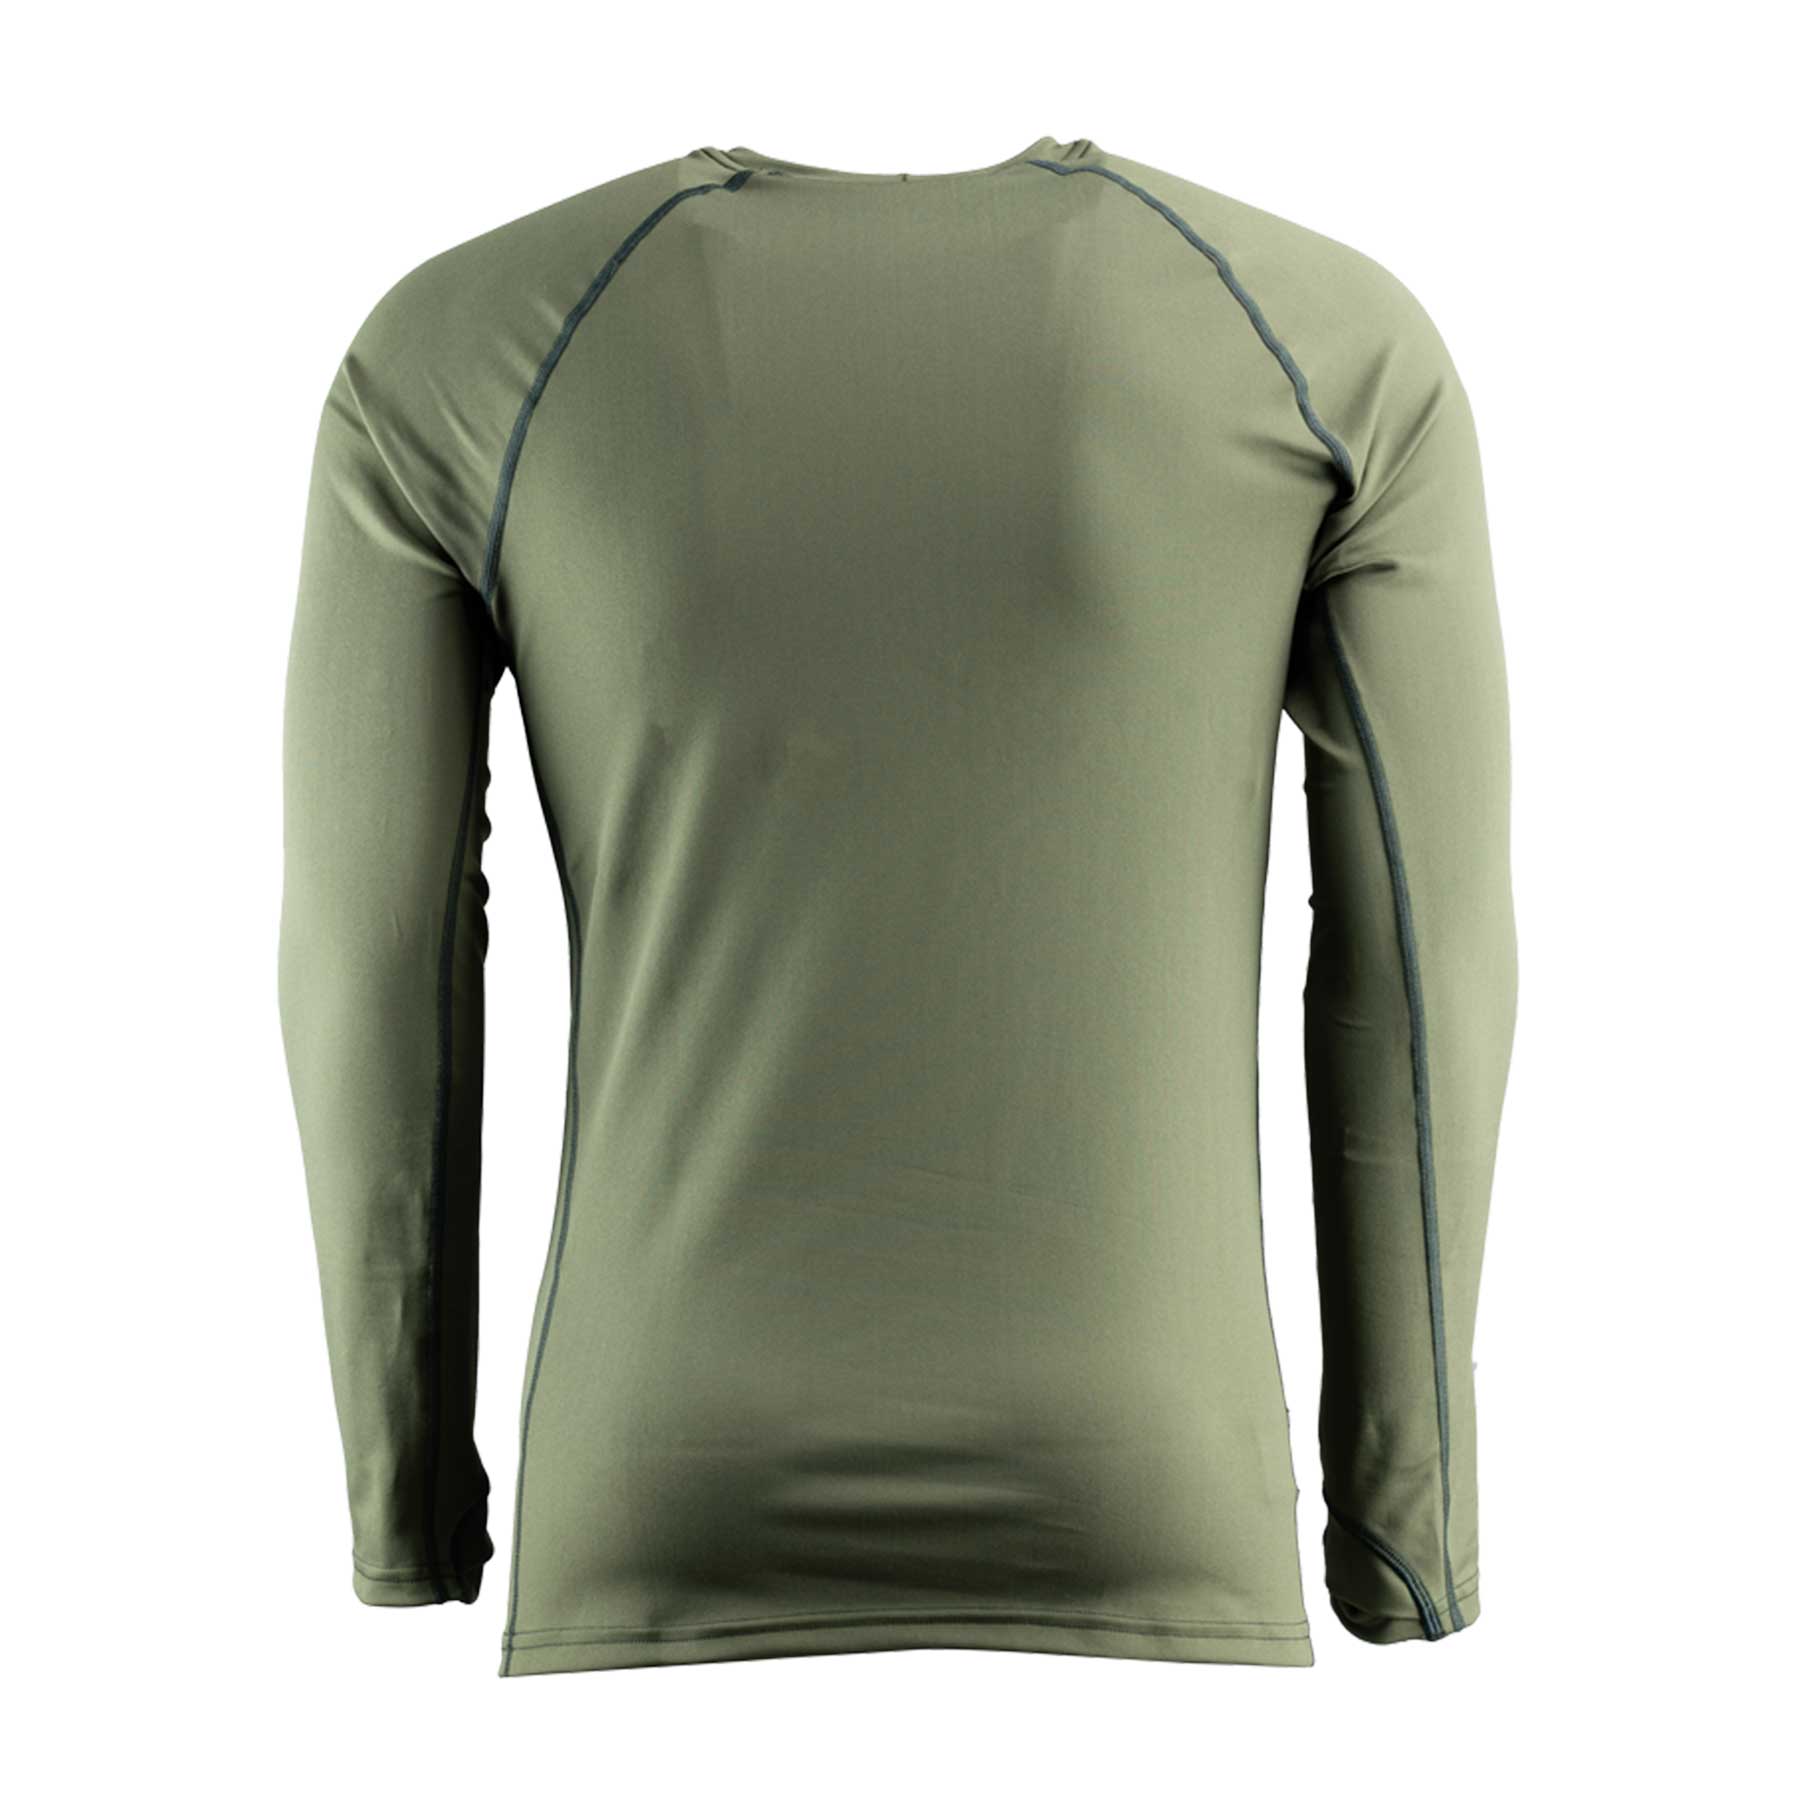 Rashguard - Long Sleeve Athletic Compression Shirt - Base layer